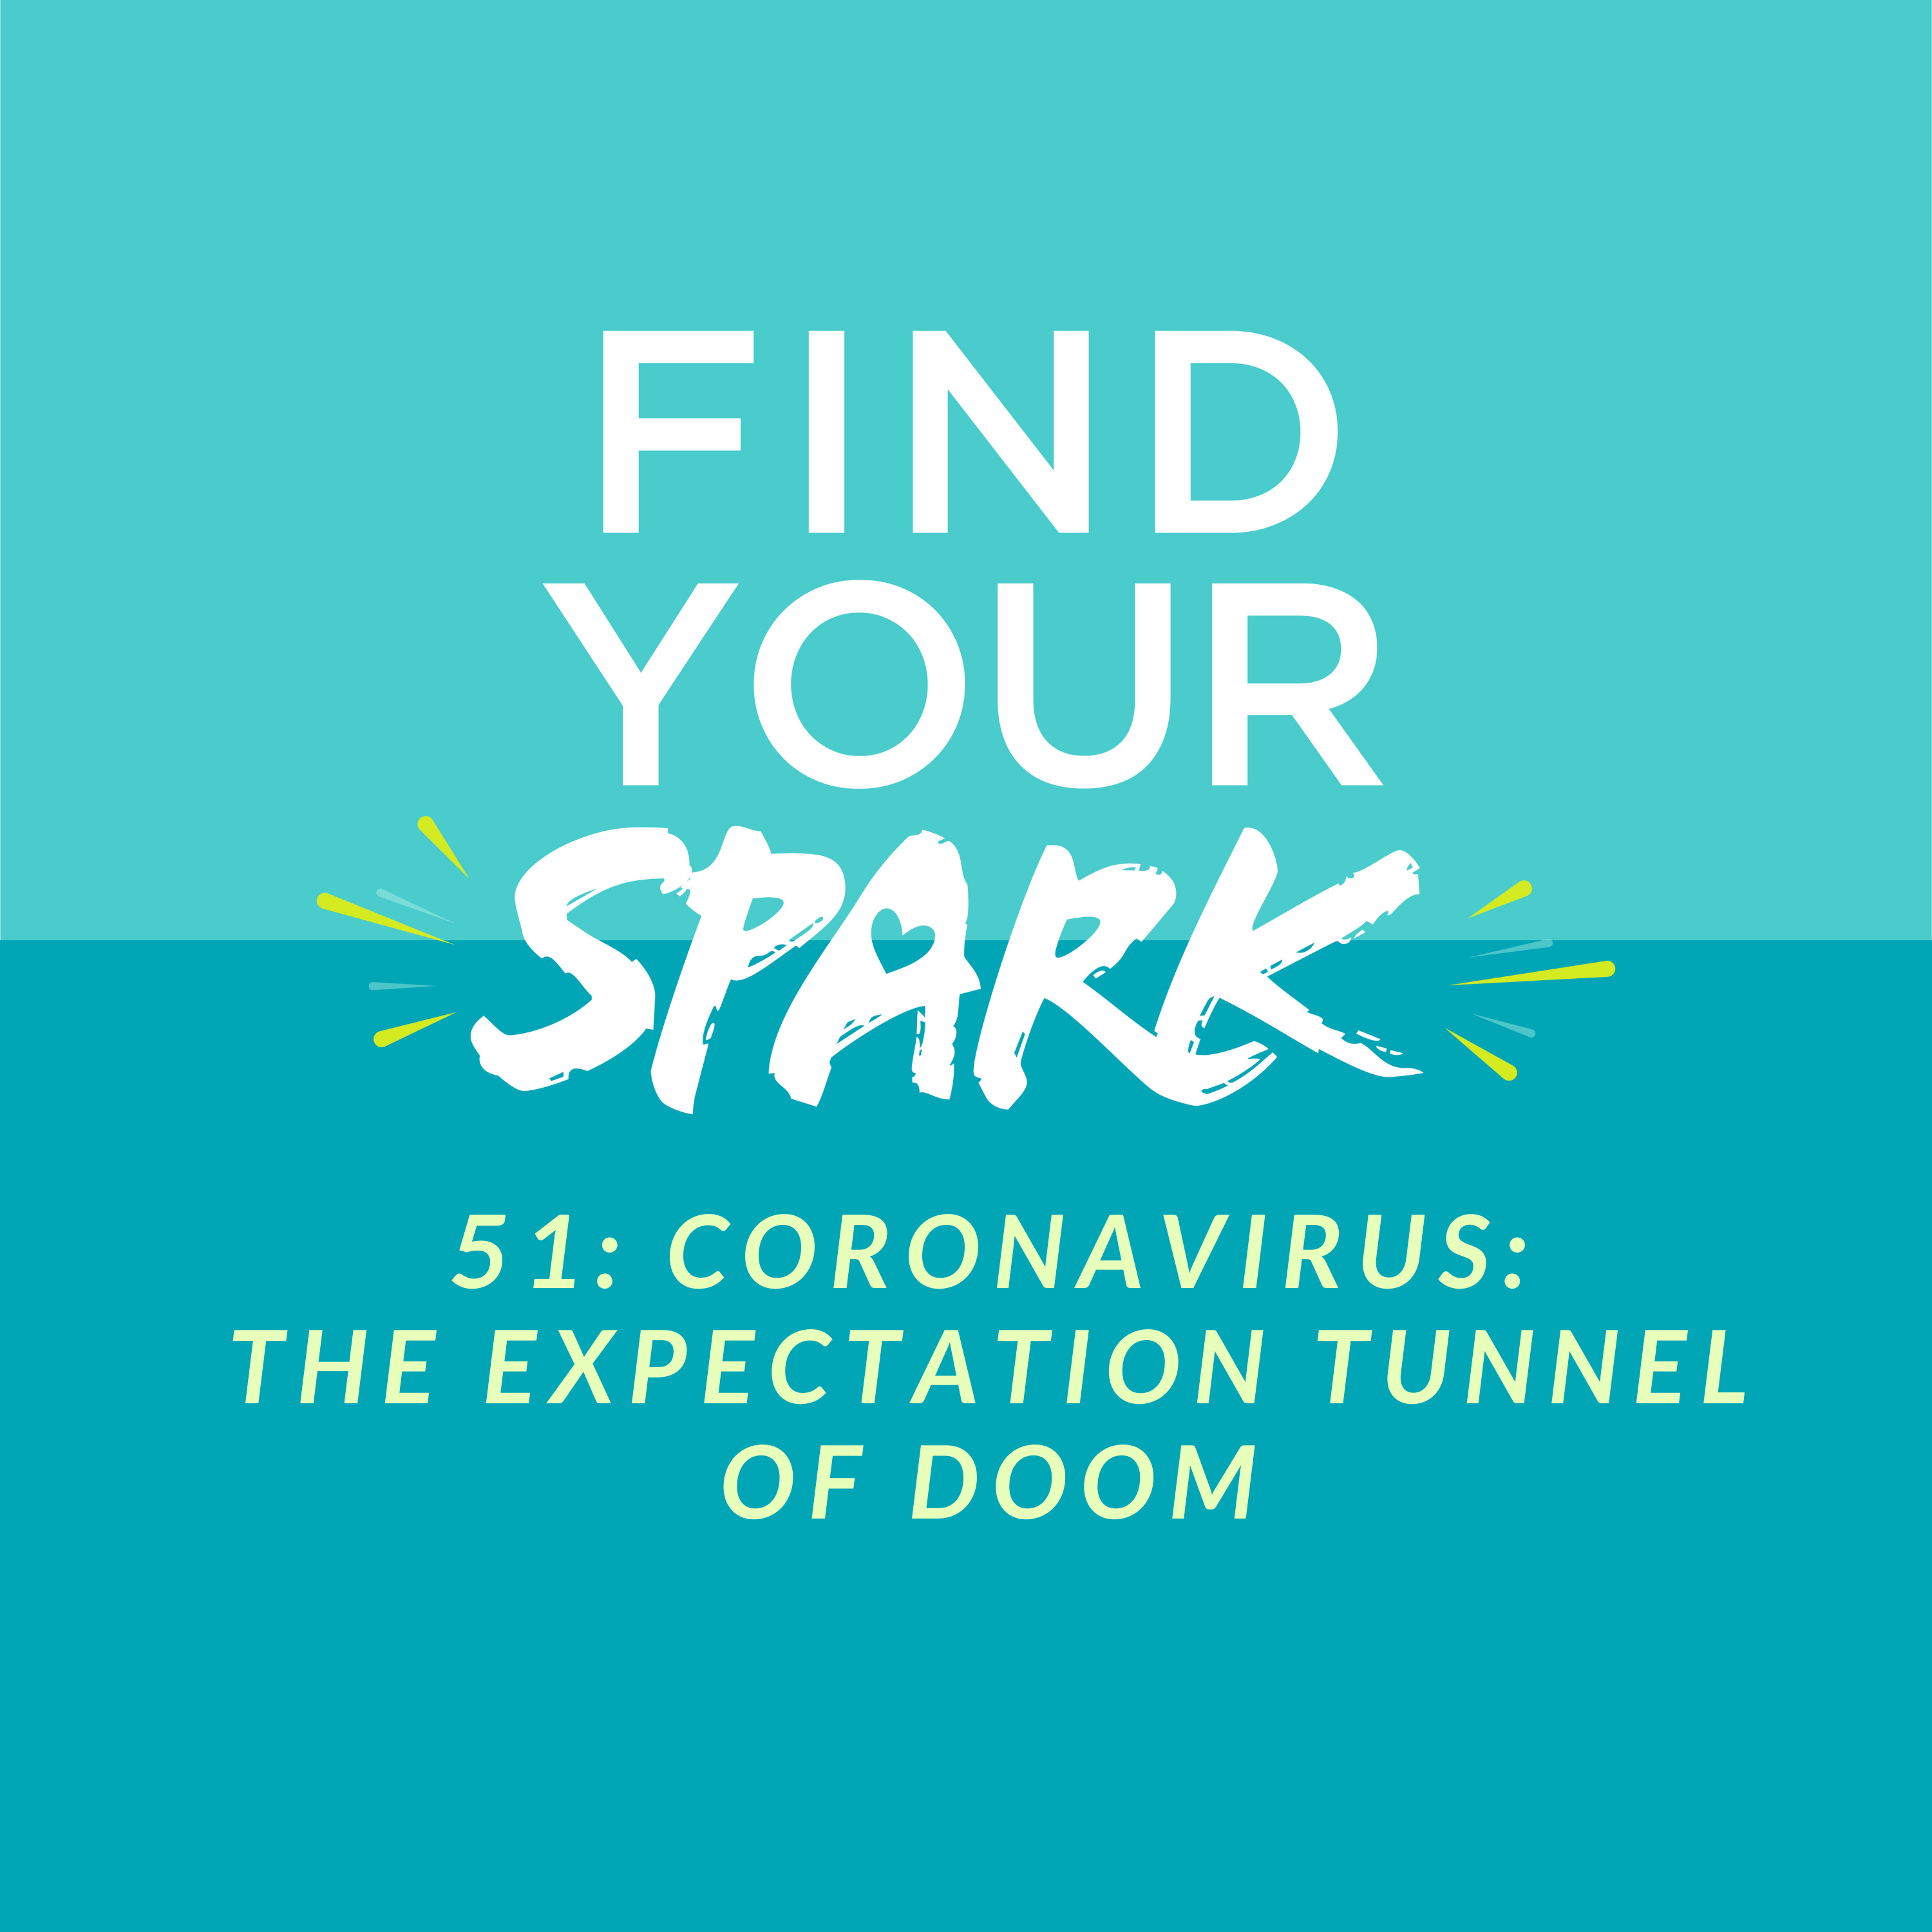 51: Coronavirus: The Expectation Tunnel of Doom